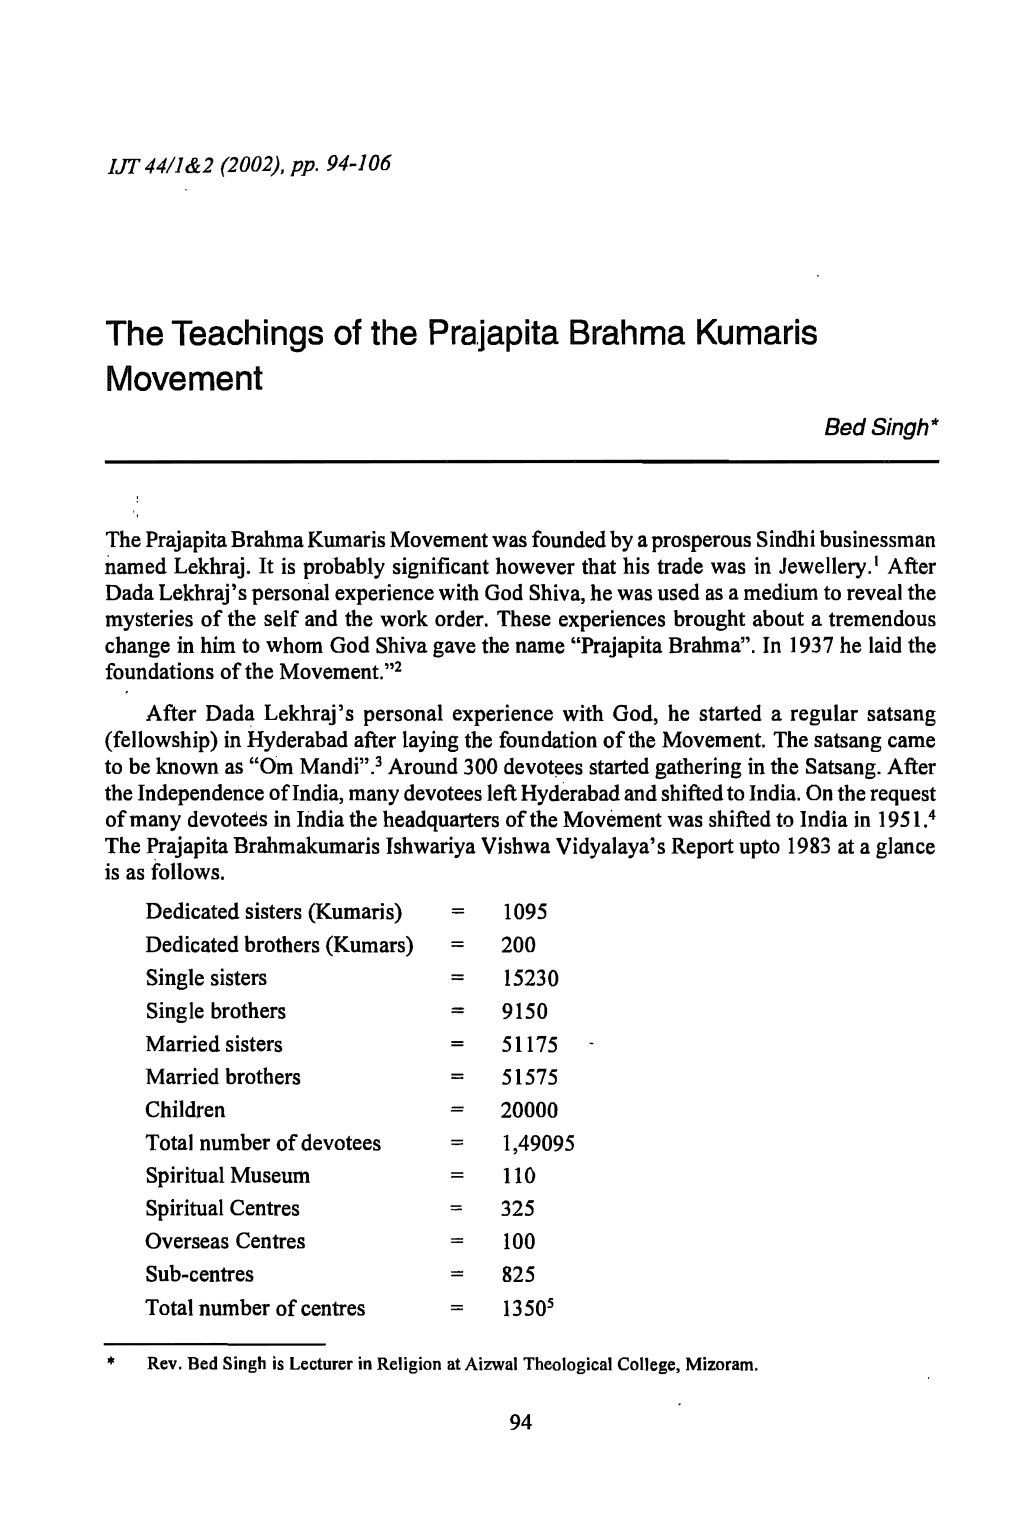 The Teachings of the Prajapita Brahma Kumaris Movement